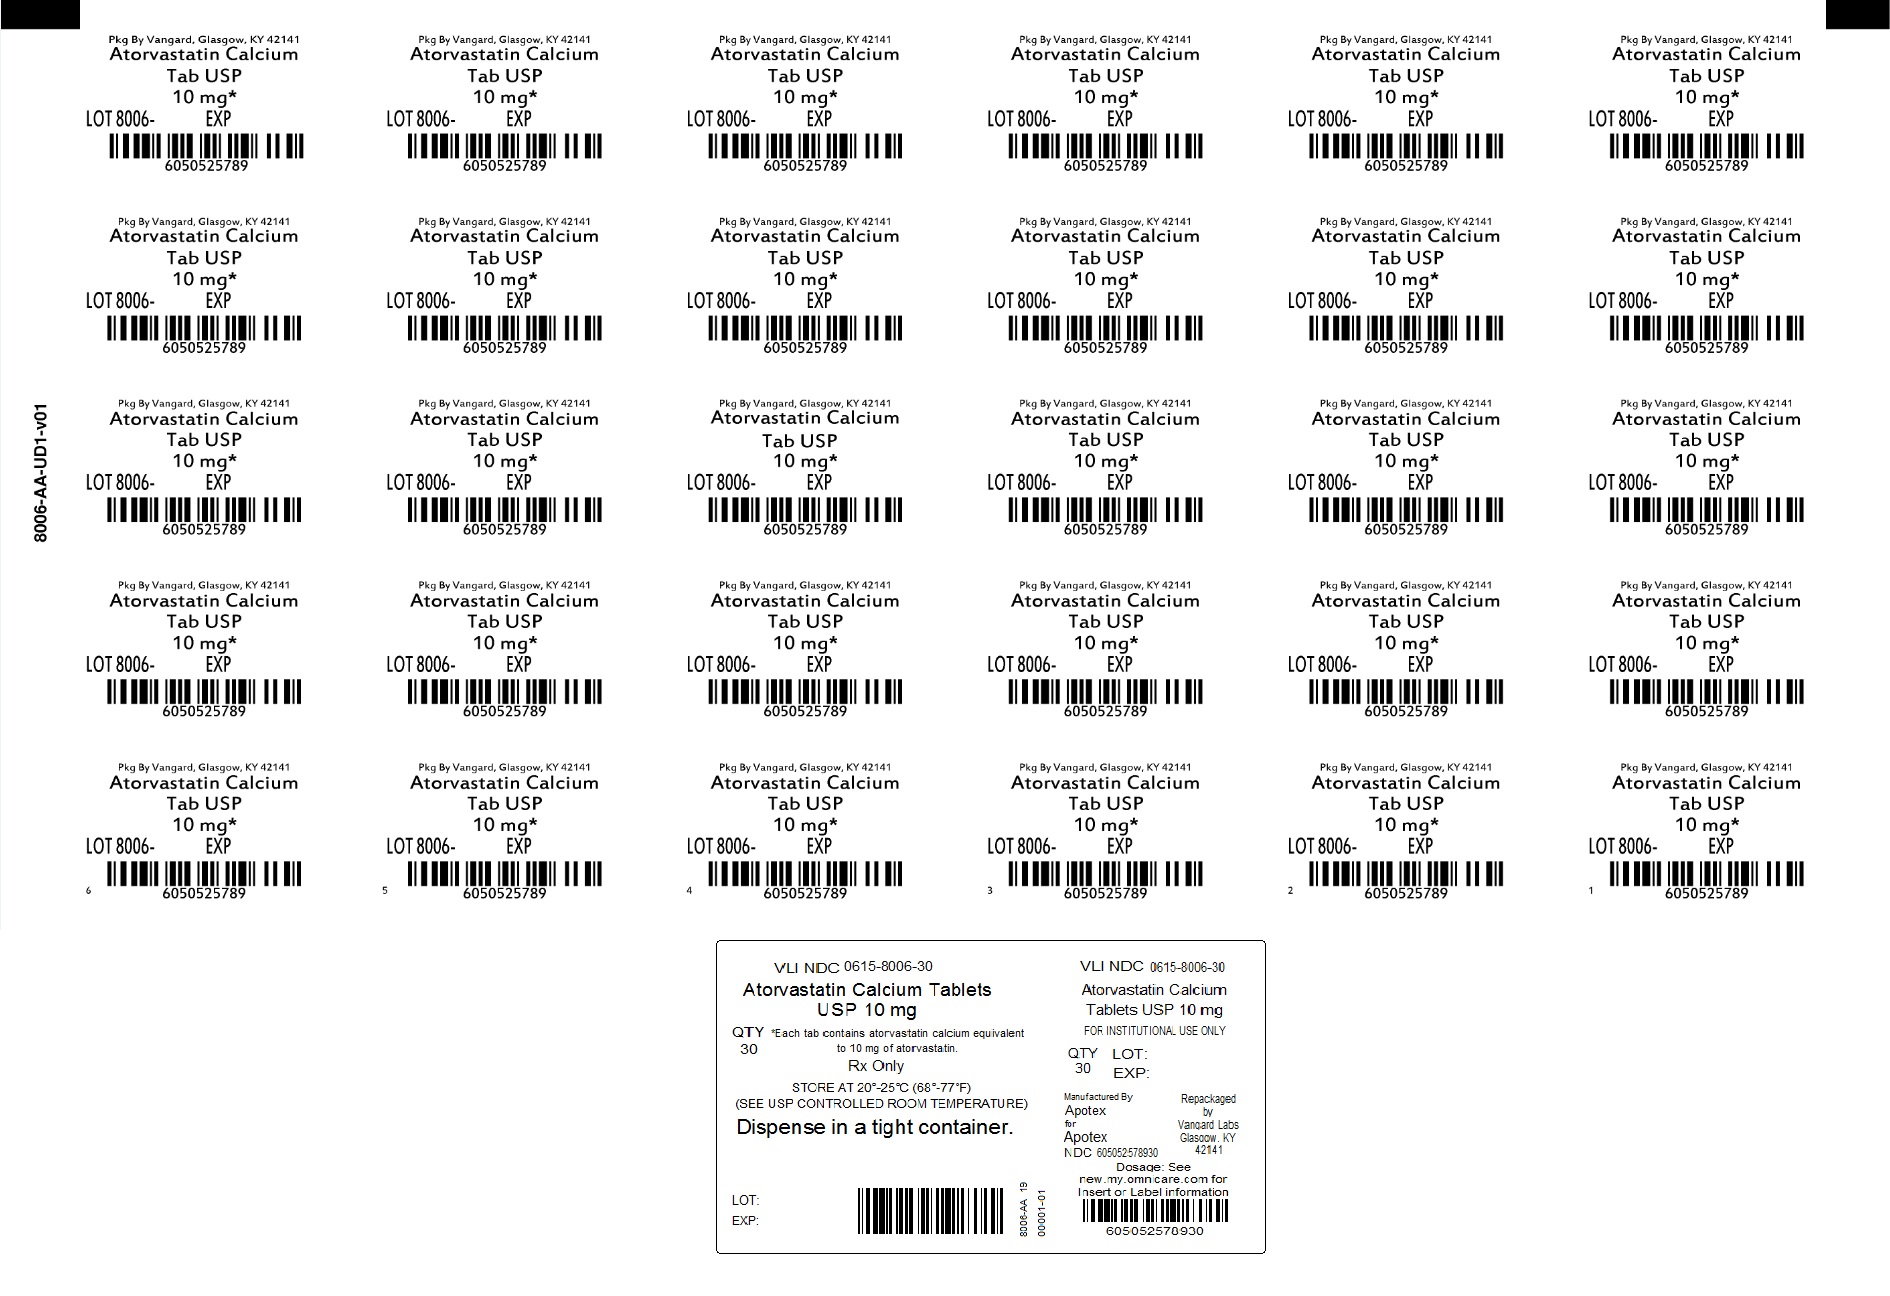 Principal Display Panel-Atorvastatin Calcium 10mg Tab unit dose label